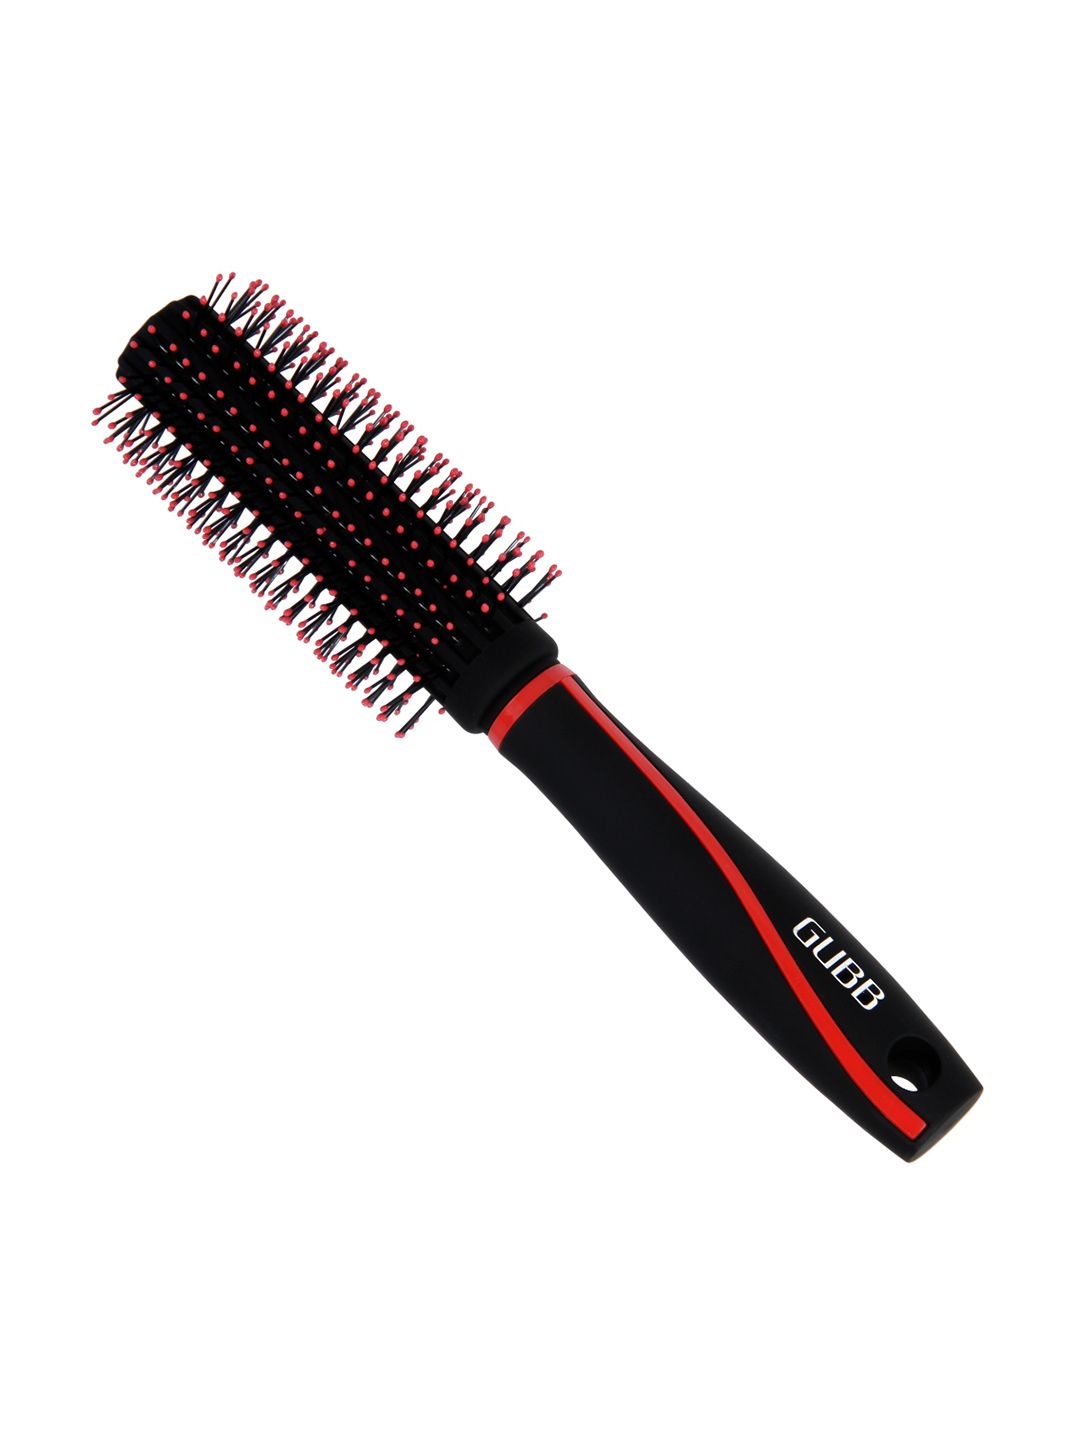 GUBB Unisex Black & Red Vogue Range Round Hair Brush Comb Price in India